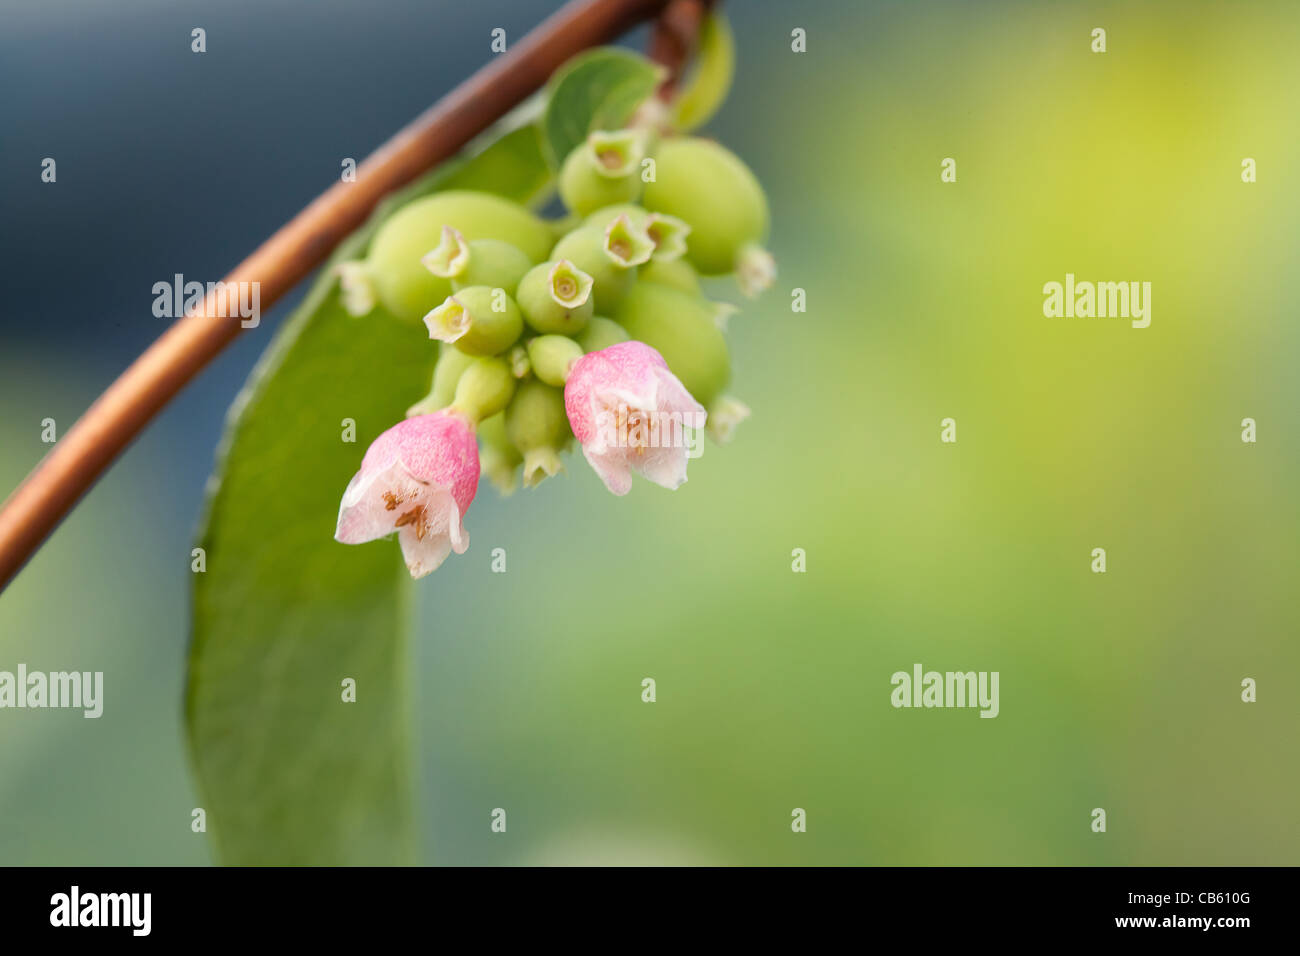 Pink flower of the Snowberry (Symphoricarpos) shrub Stock Photo